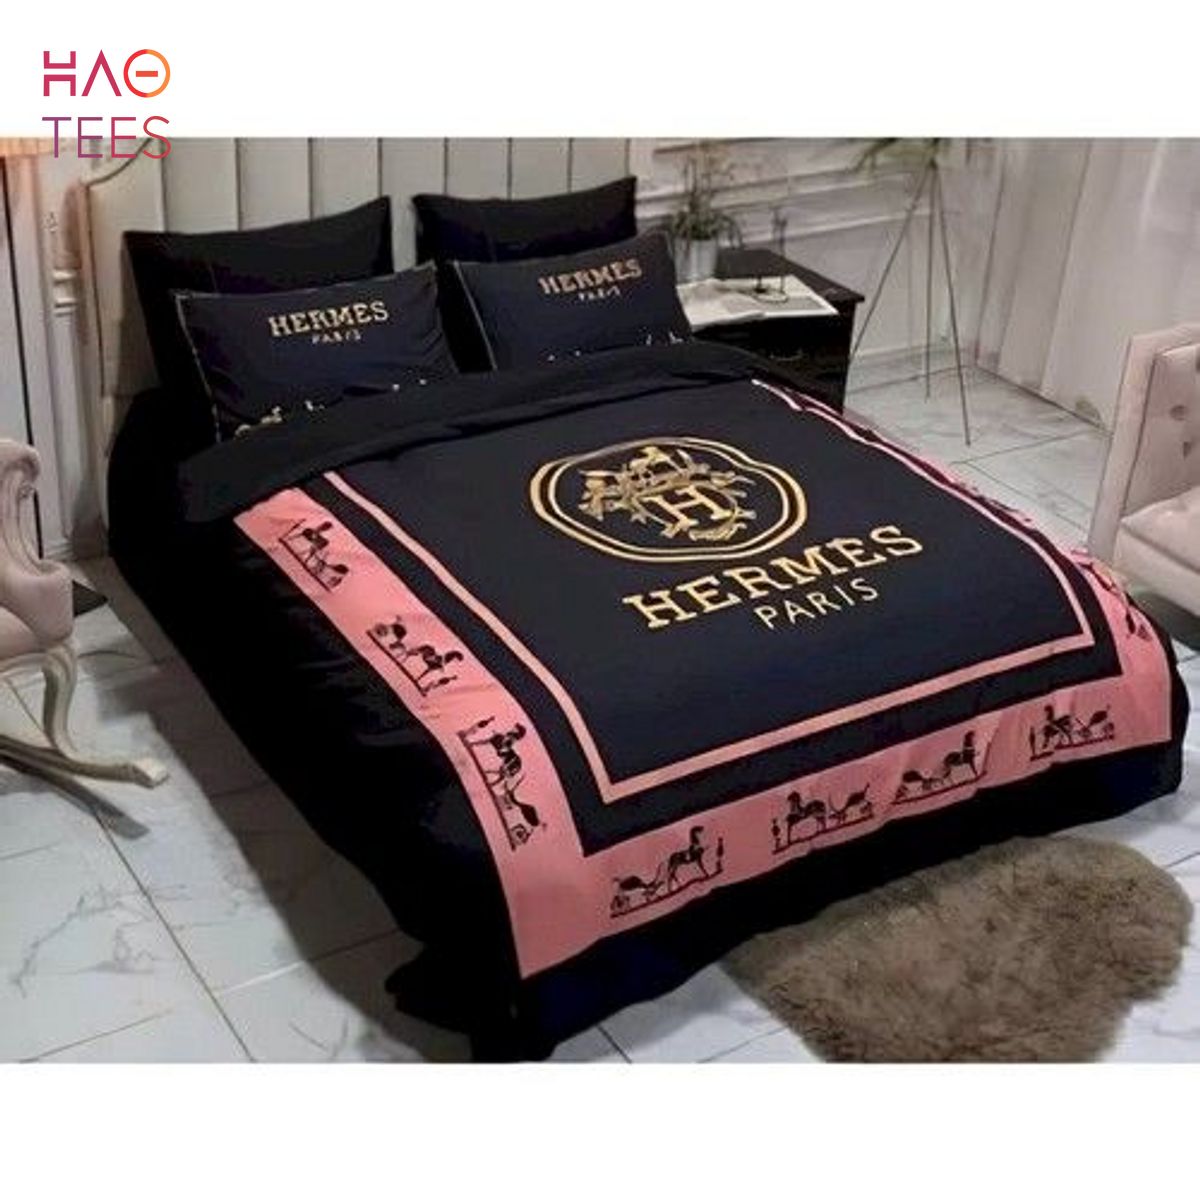 Hermes Paris Full Black Mix Pink Luxury Brand Bedding Set